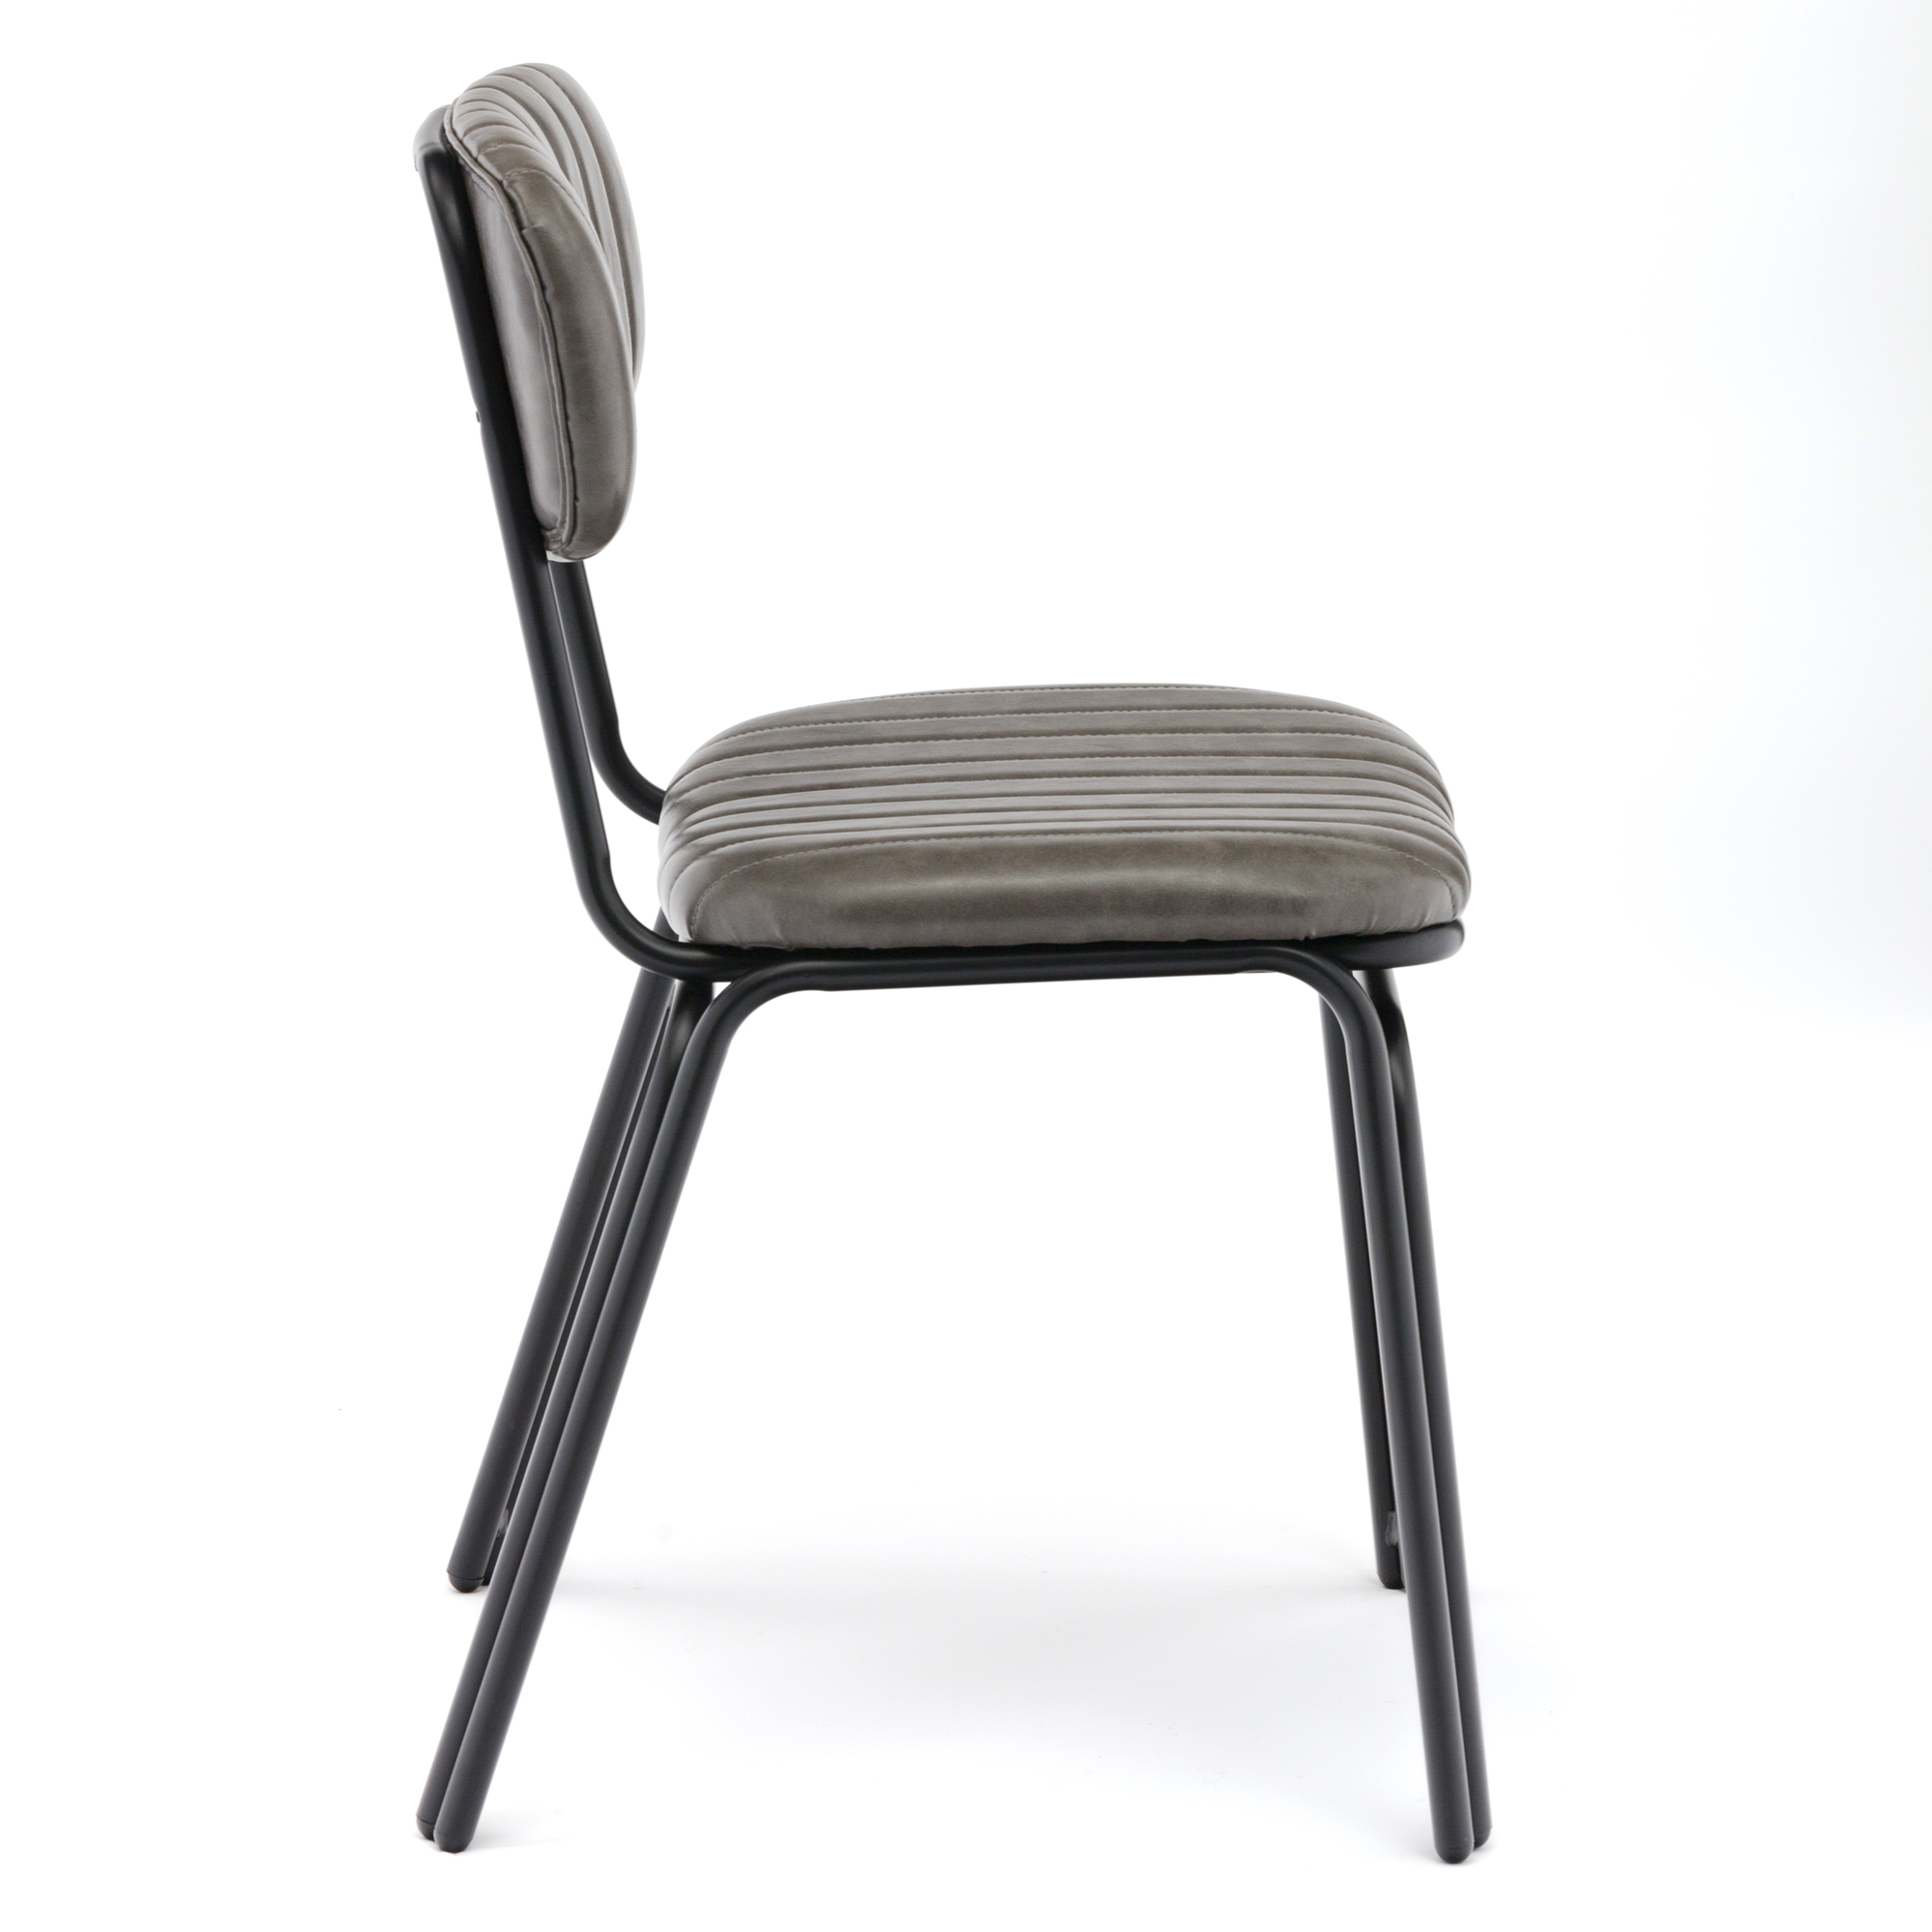 https://www.goldapplefurniture.com/modern-upholstered- Dining-chair-ga3910c-45stp-product/